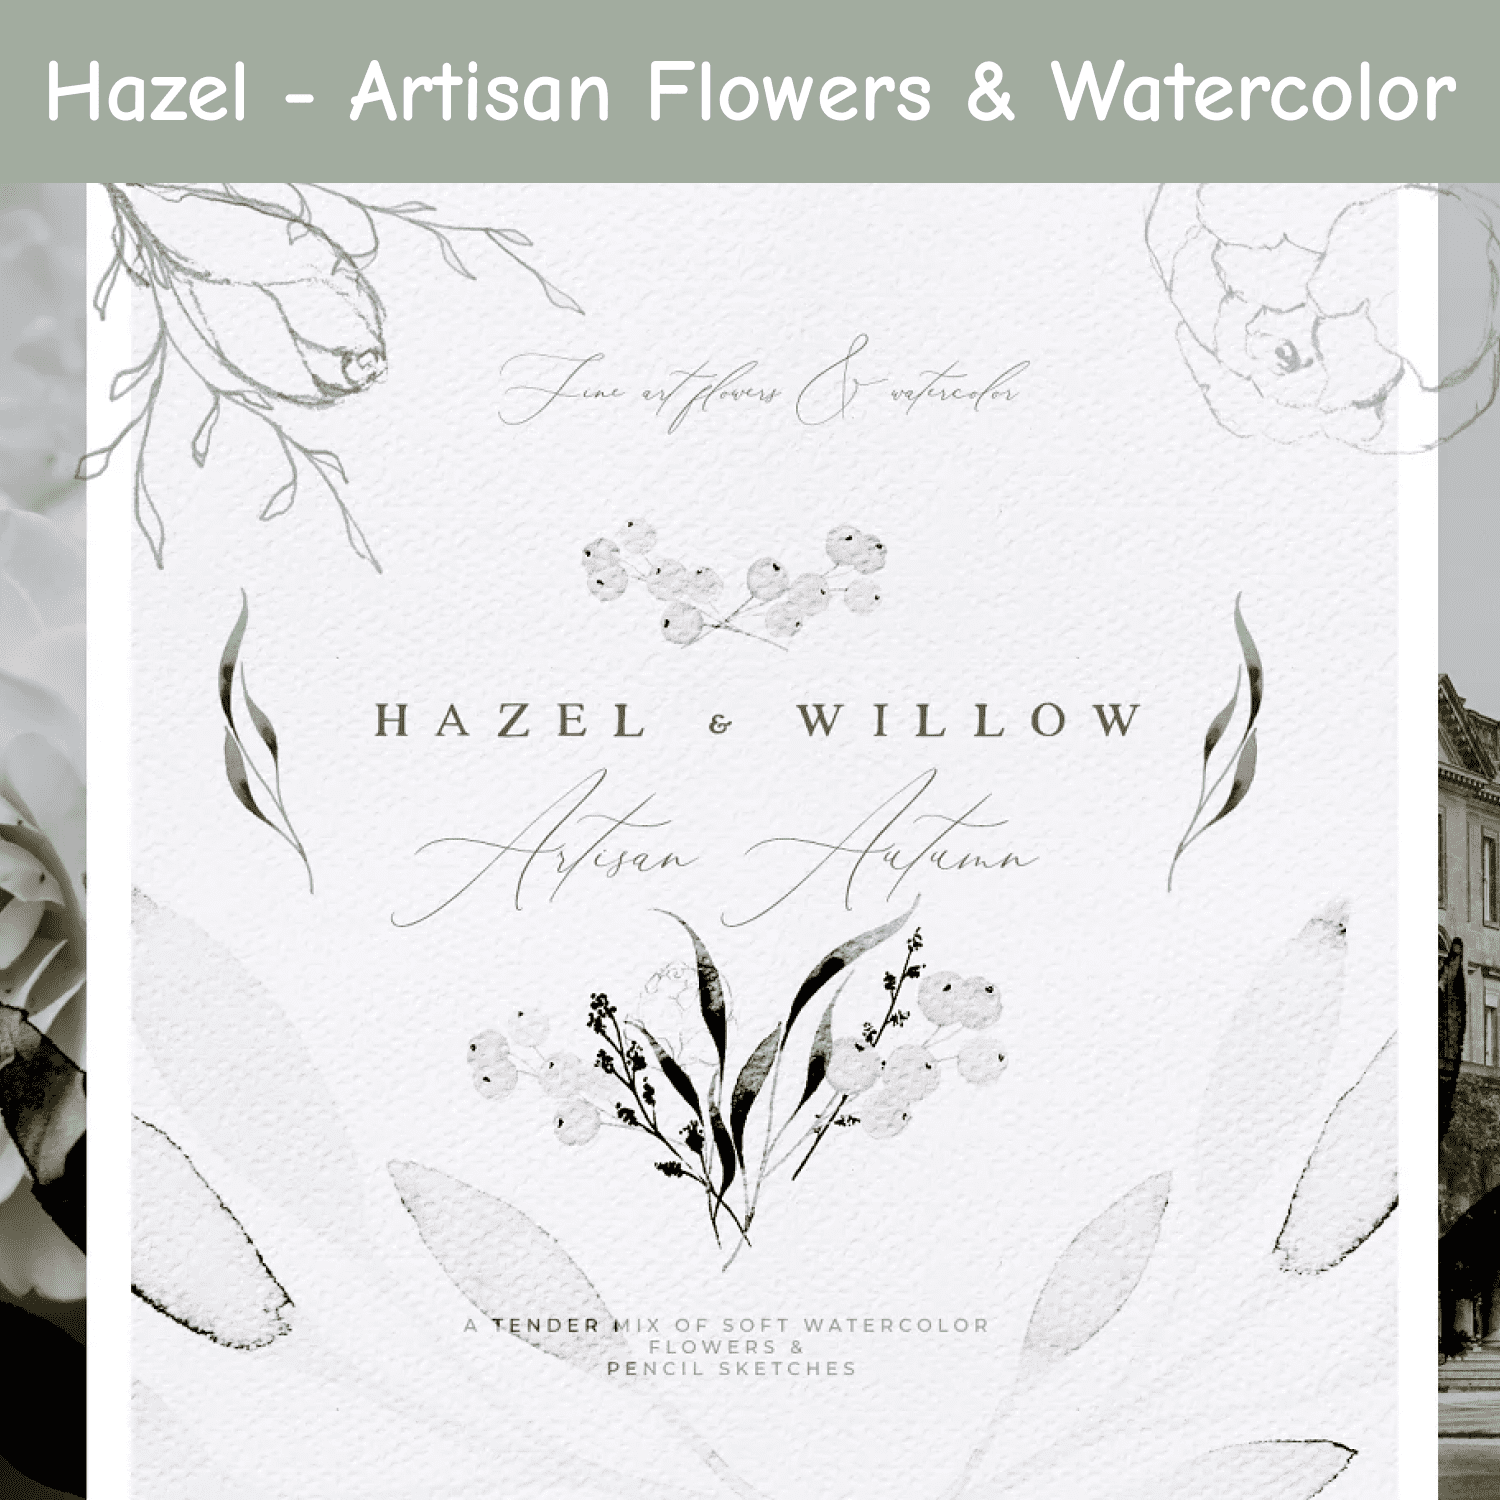 Hazel - Artisan Flowers & Watercolor cover.